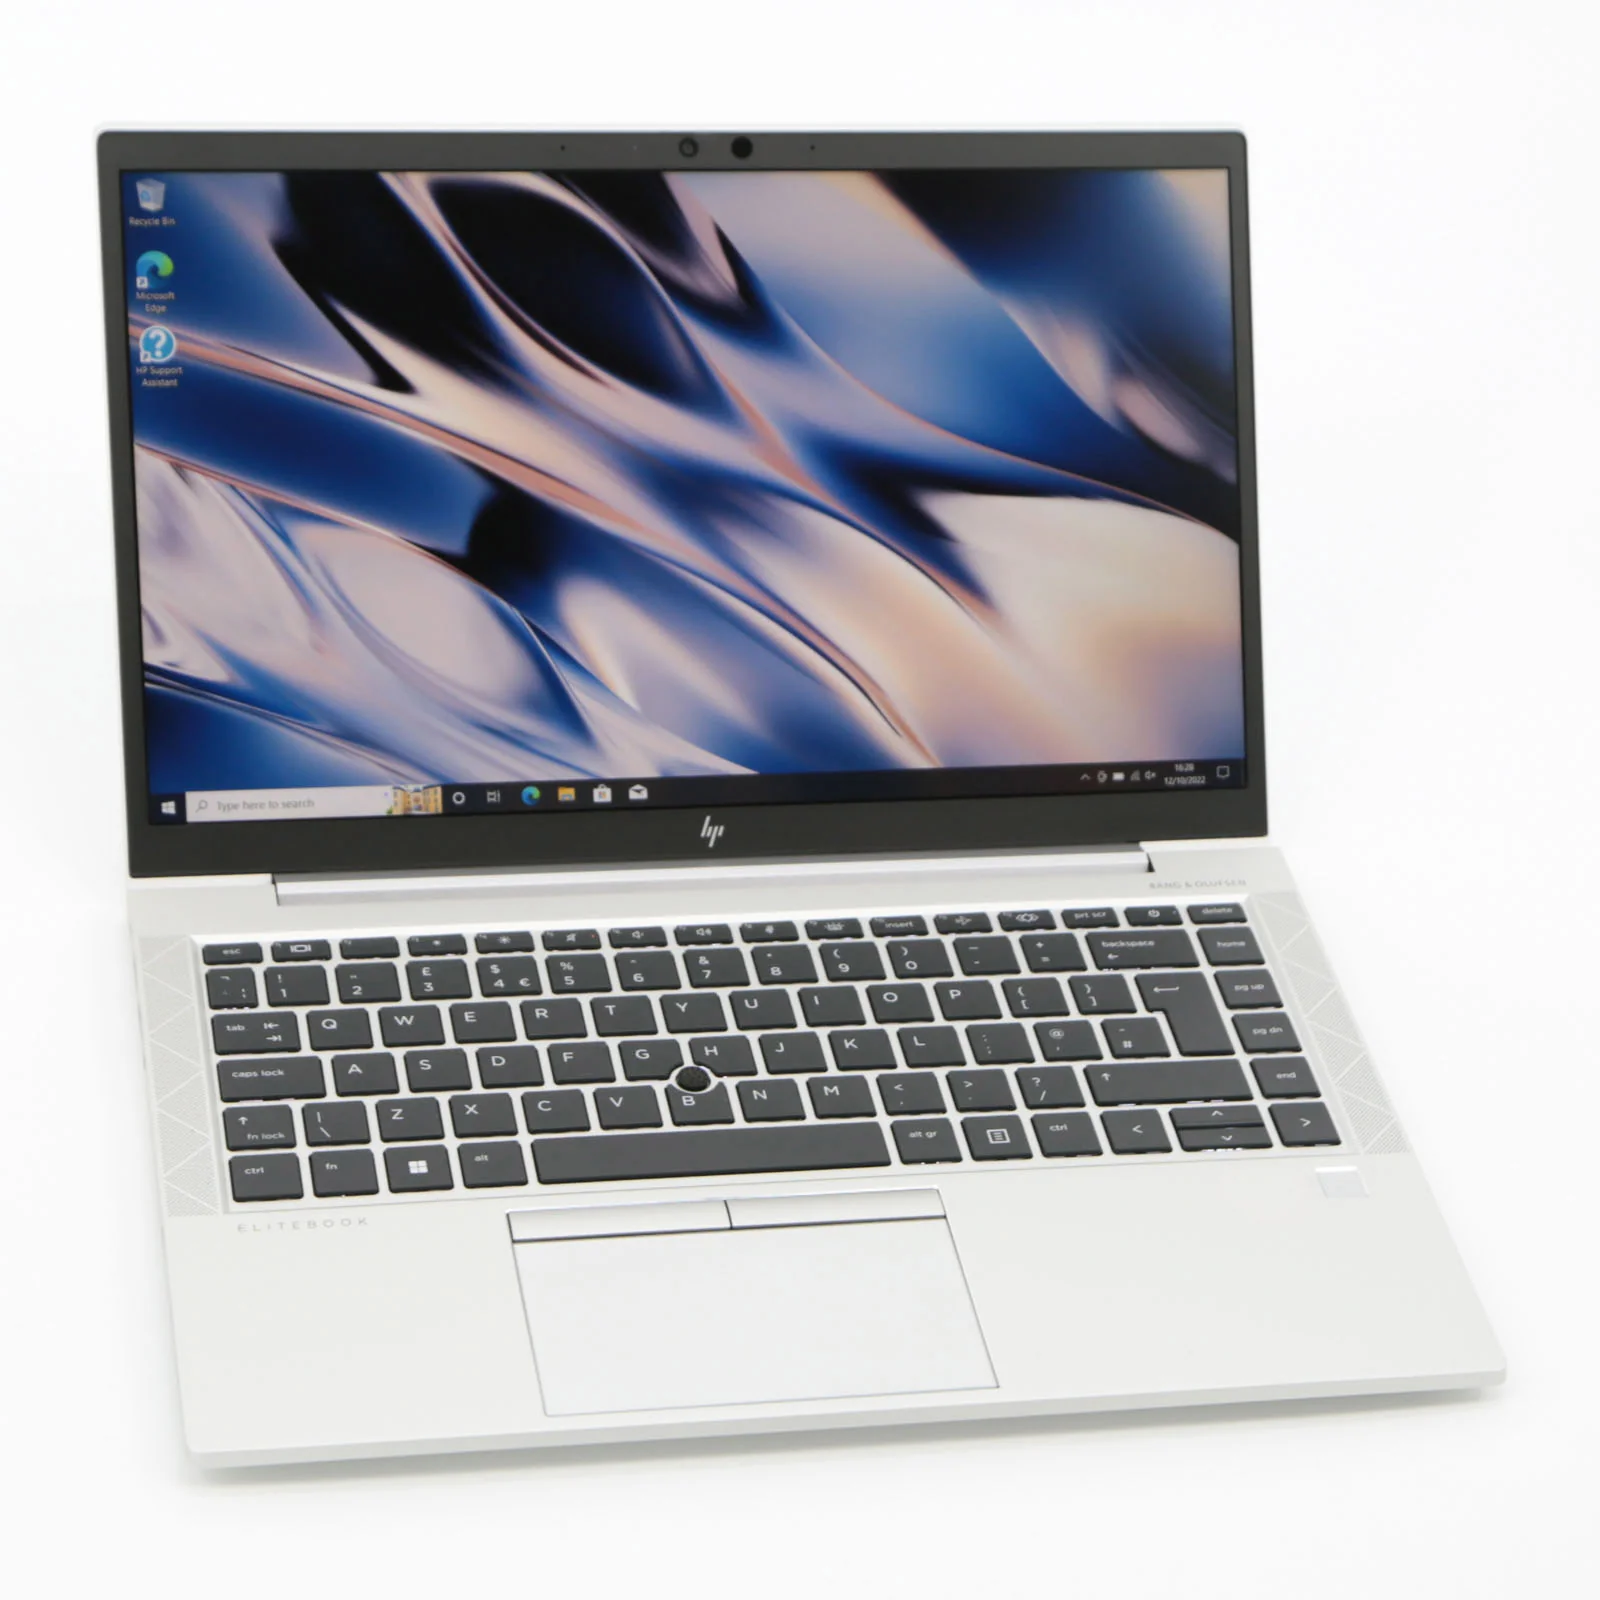 HP EliteBook 1040 G4 Core i7 8GB 256GB Laptop